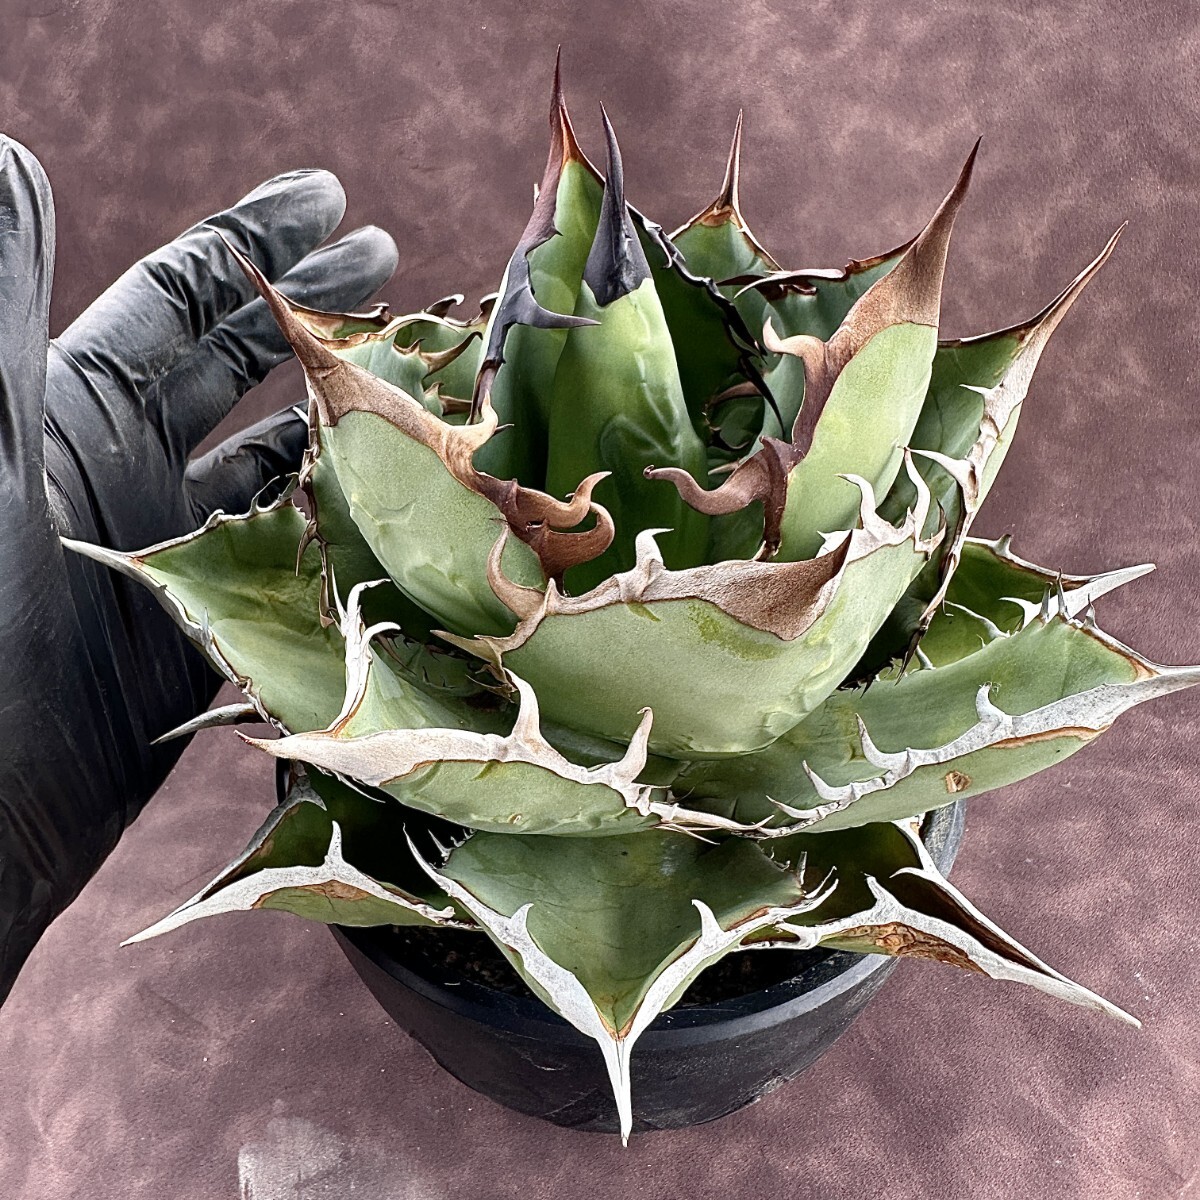 【Lj_plants】 W317 激レア高級品種 アガベ チタノタ 蜘蛛 極上強棘 極美極上子株の画像2